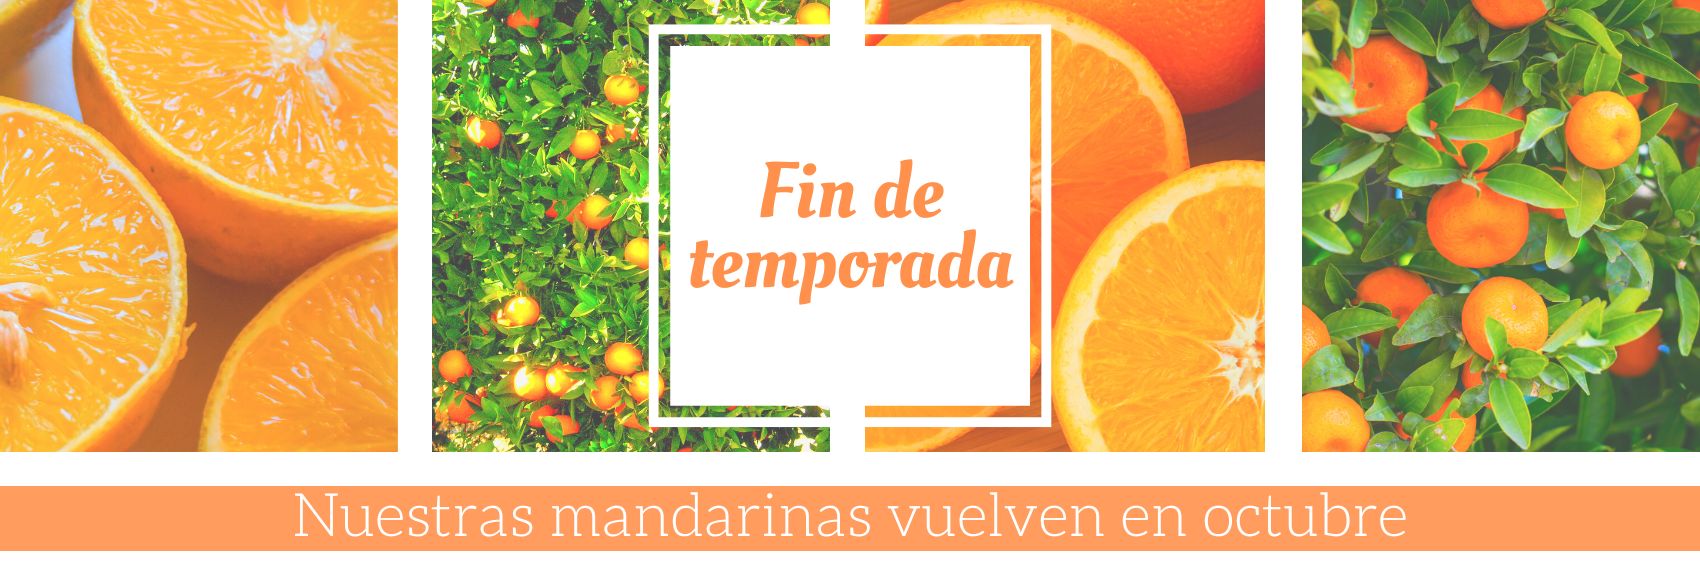 fin-temporada-castellano-mandarinas.jpg